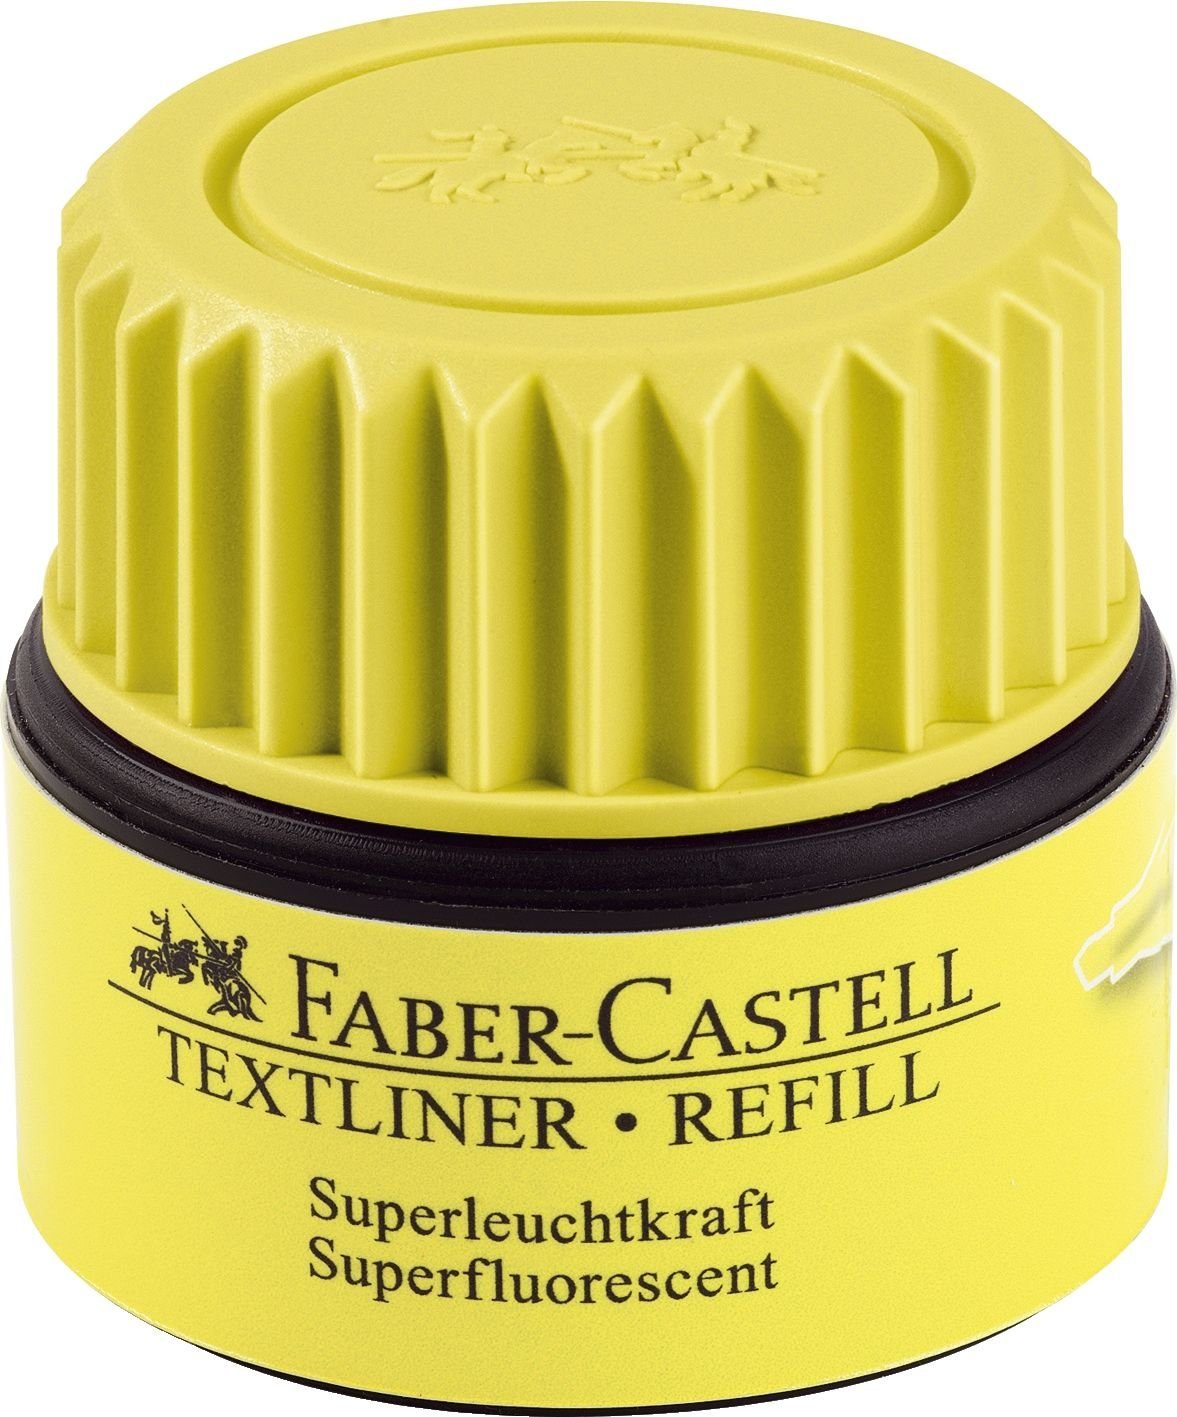 Faber-Castell Handgelenkstütze FABER-CASTELL Nachfüll-Station TEXTLINER 1549, leuchtgelb